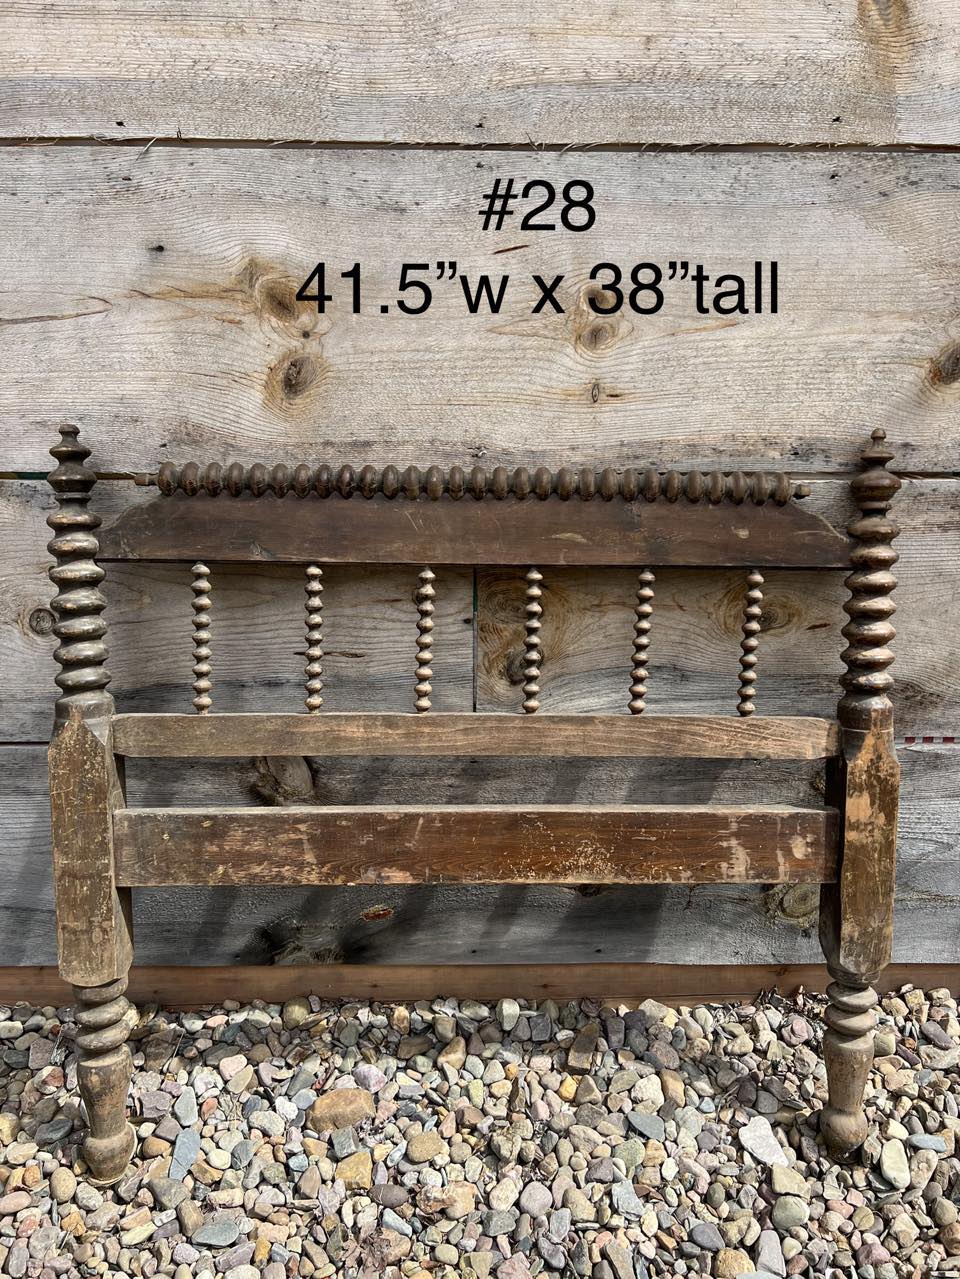 Headboard #28 Available for custom bench build